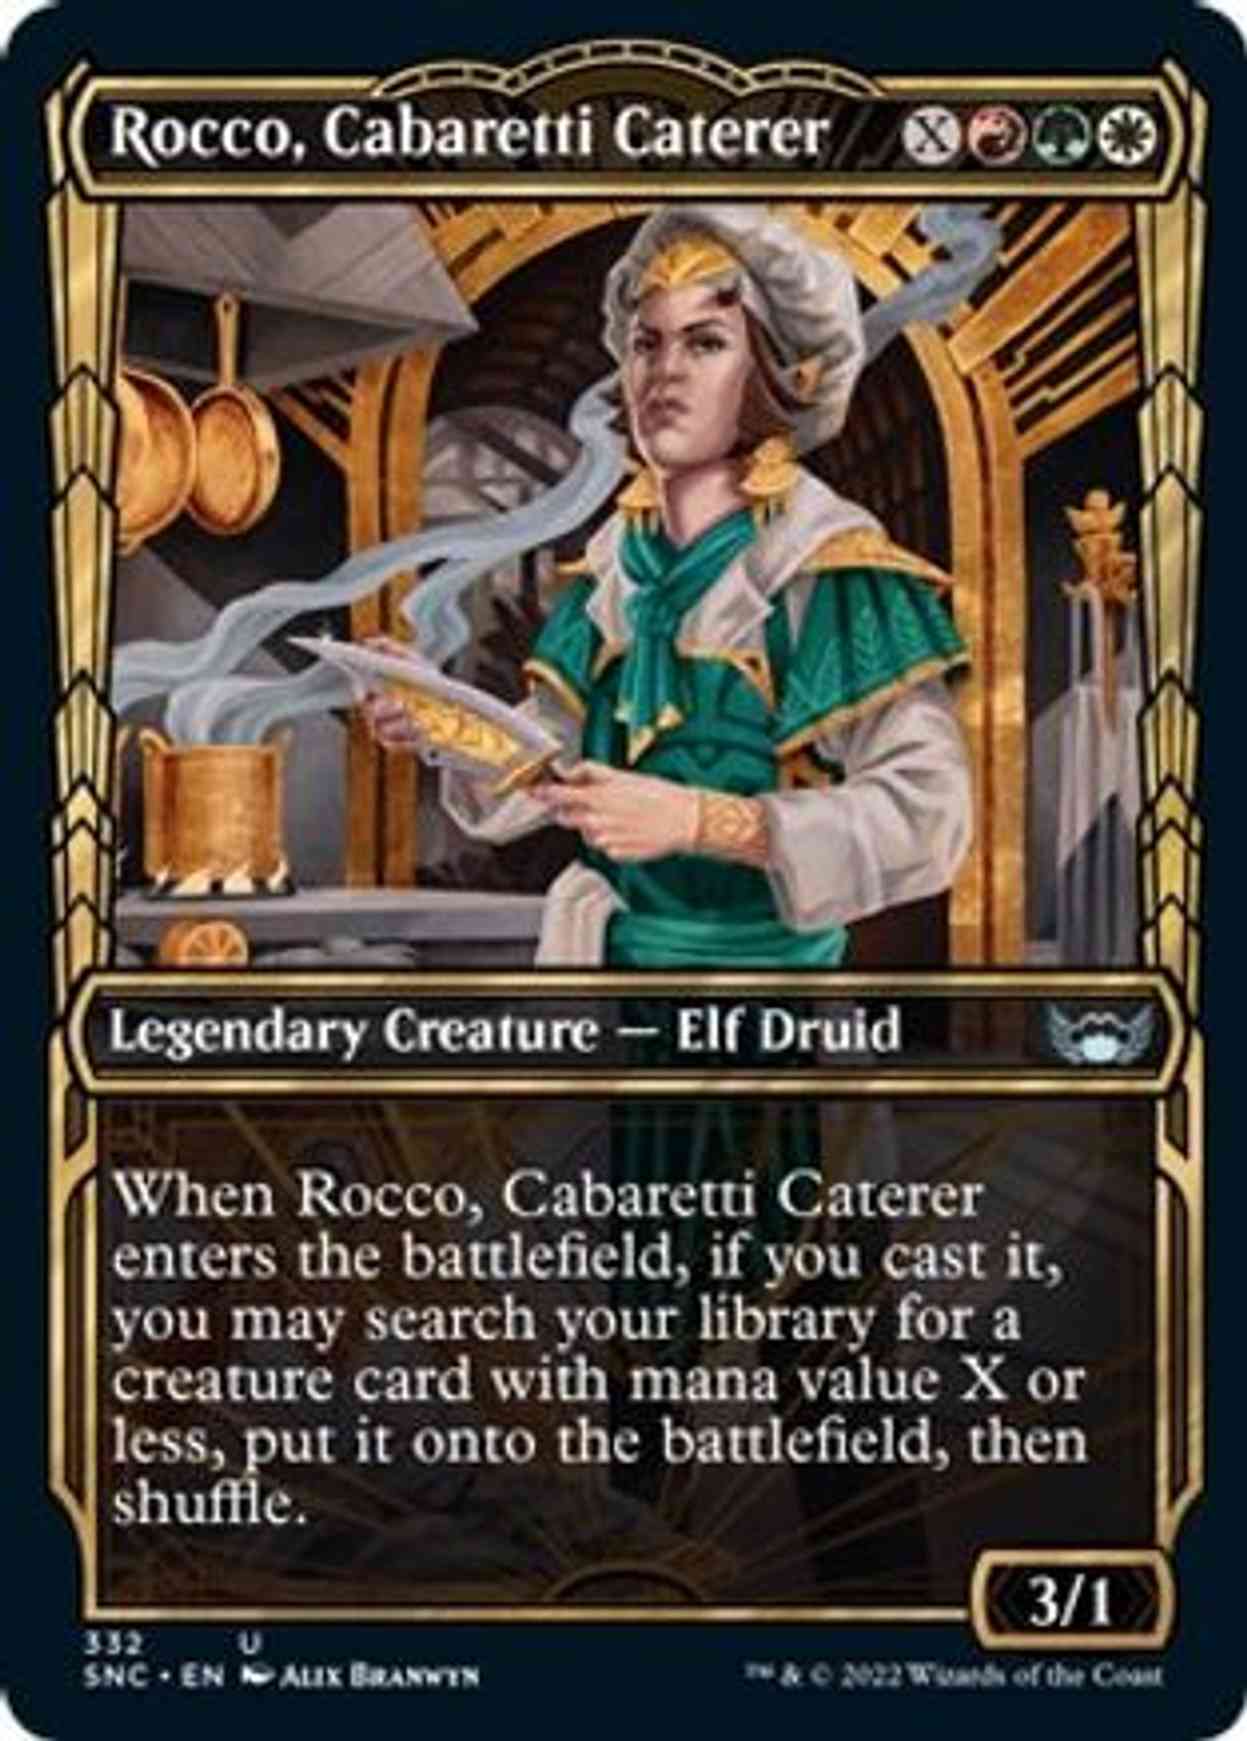 Rocco, Cabaretti Caterer (Showcase) magic card front